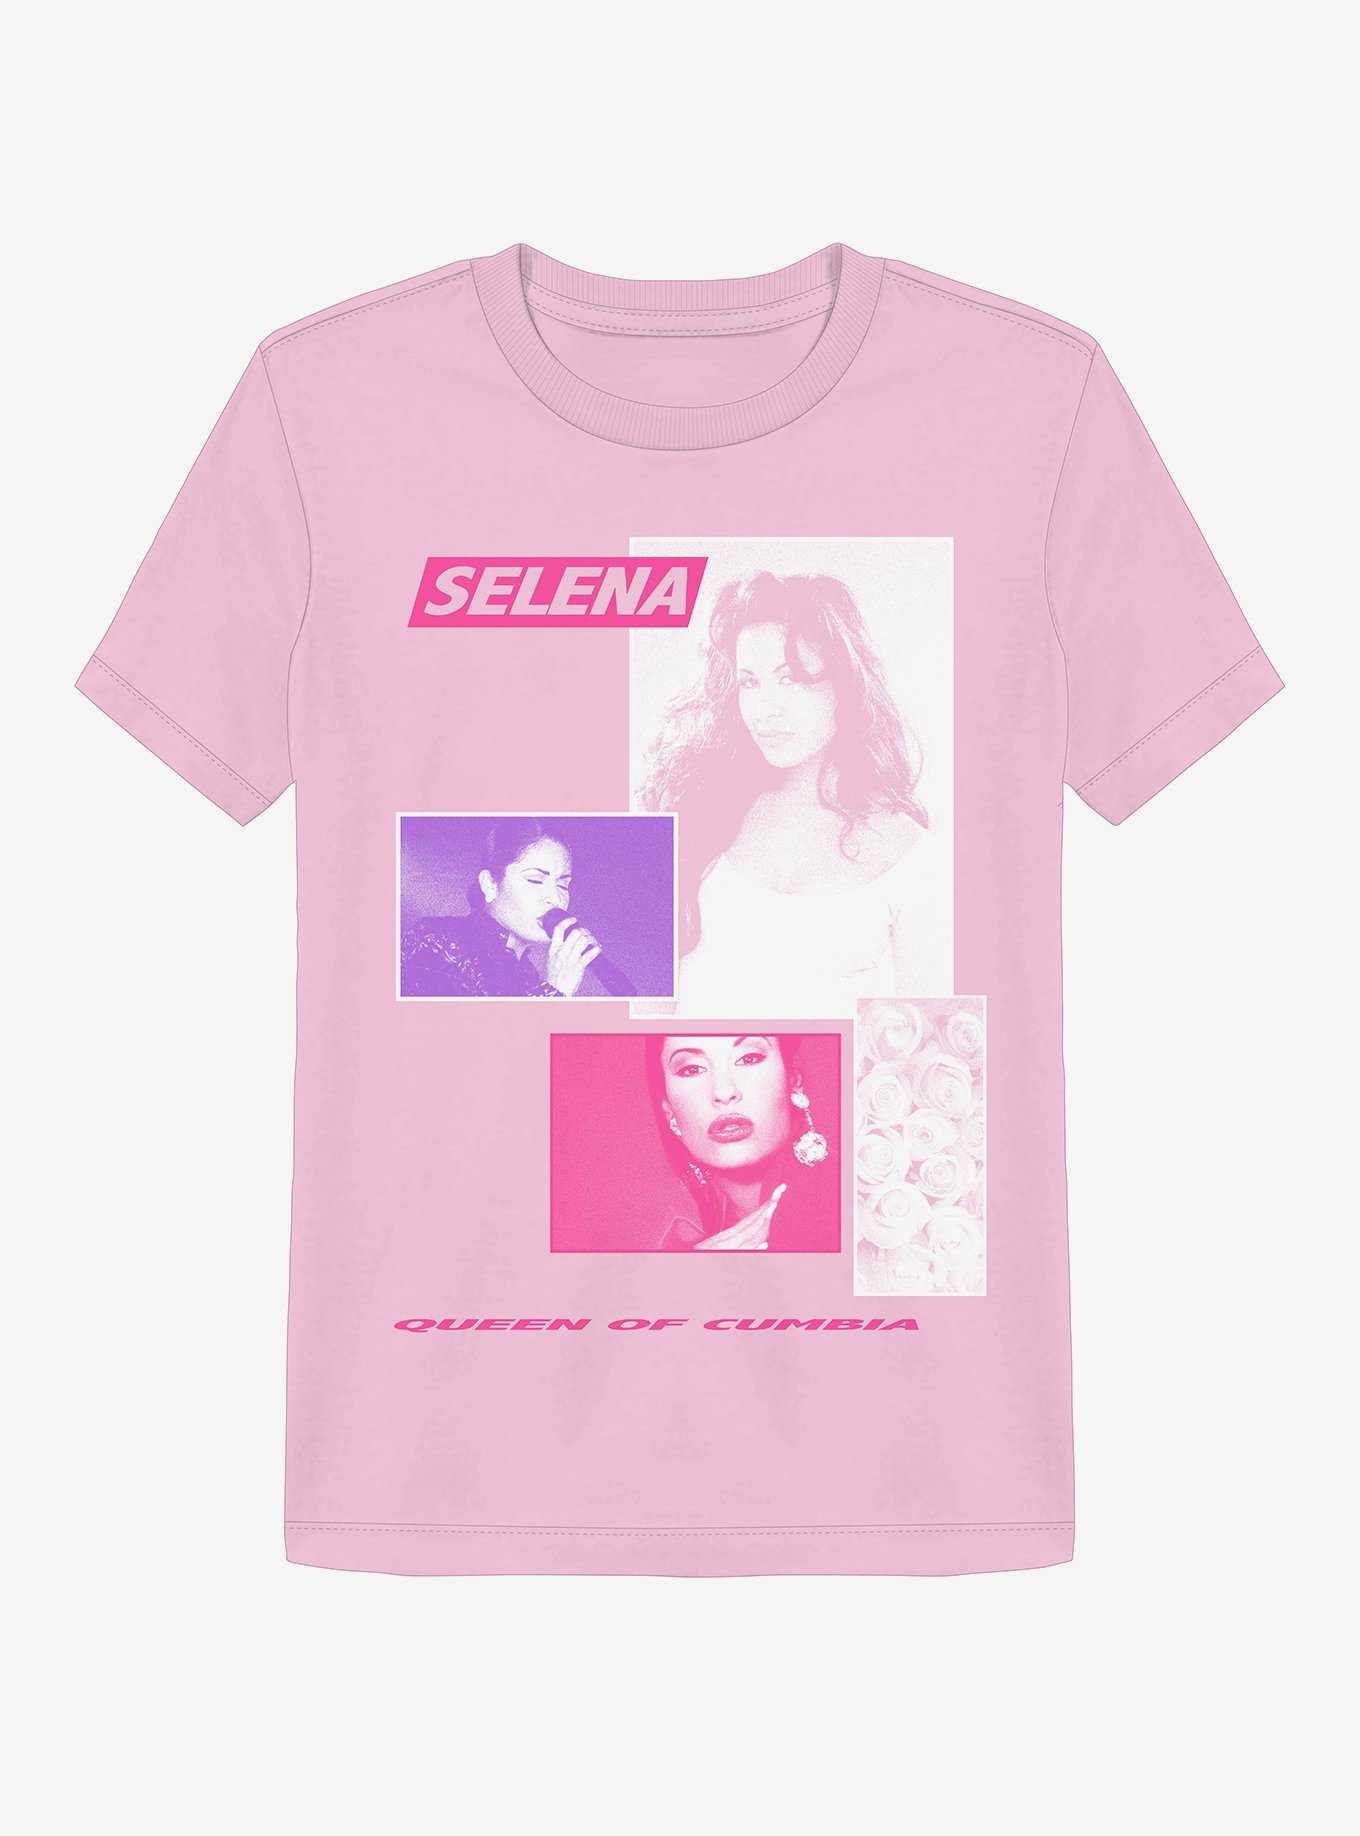 Selena Queen Of Cumbia Photo Collage Boyfriend Fit Girls T-Shirt, , hi-res